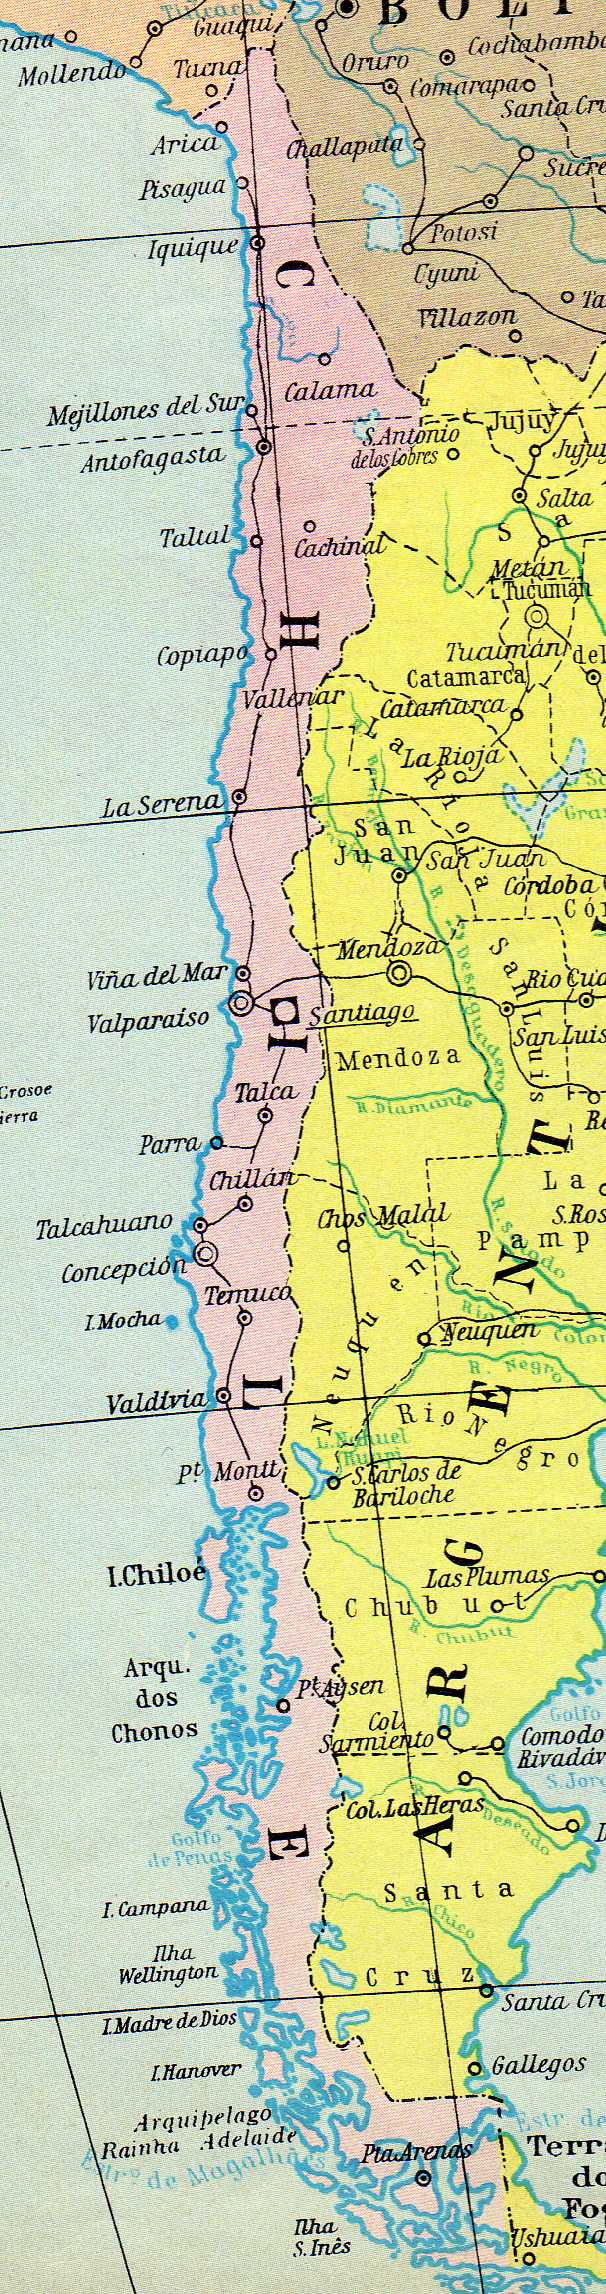 mapa_chile001.jpg